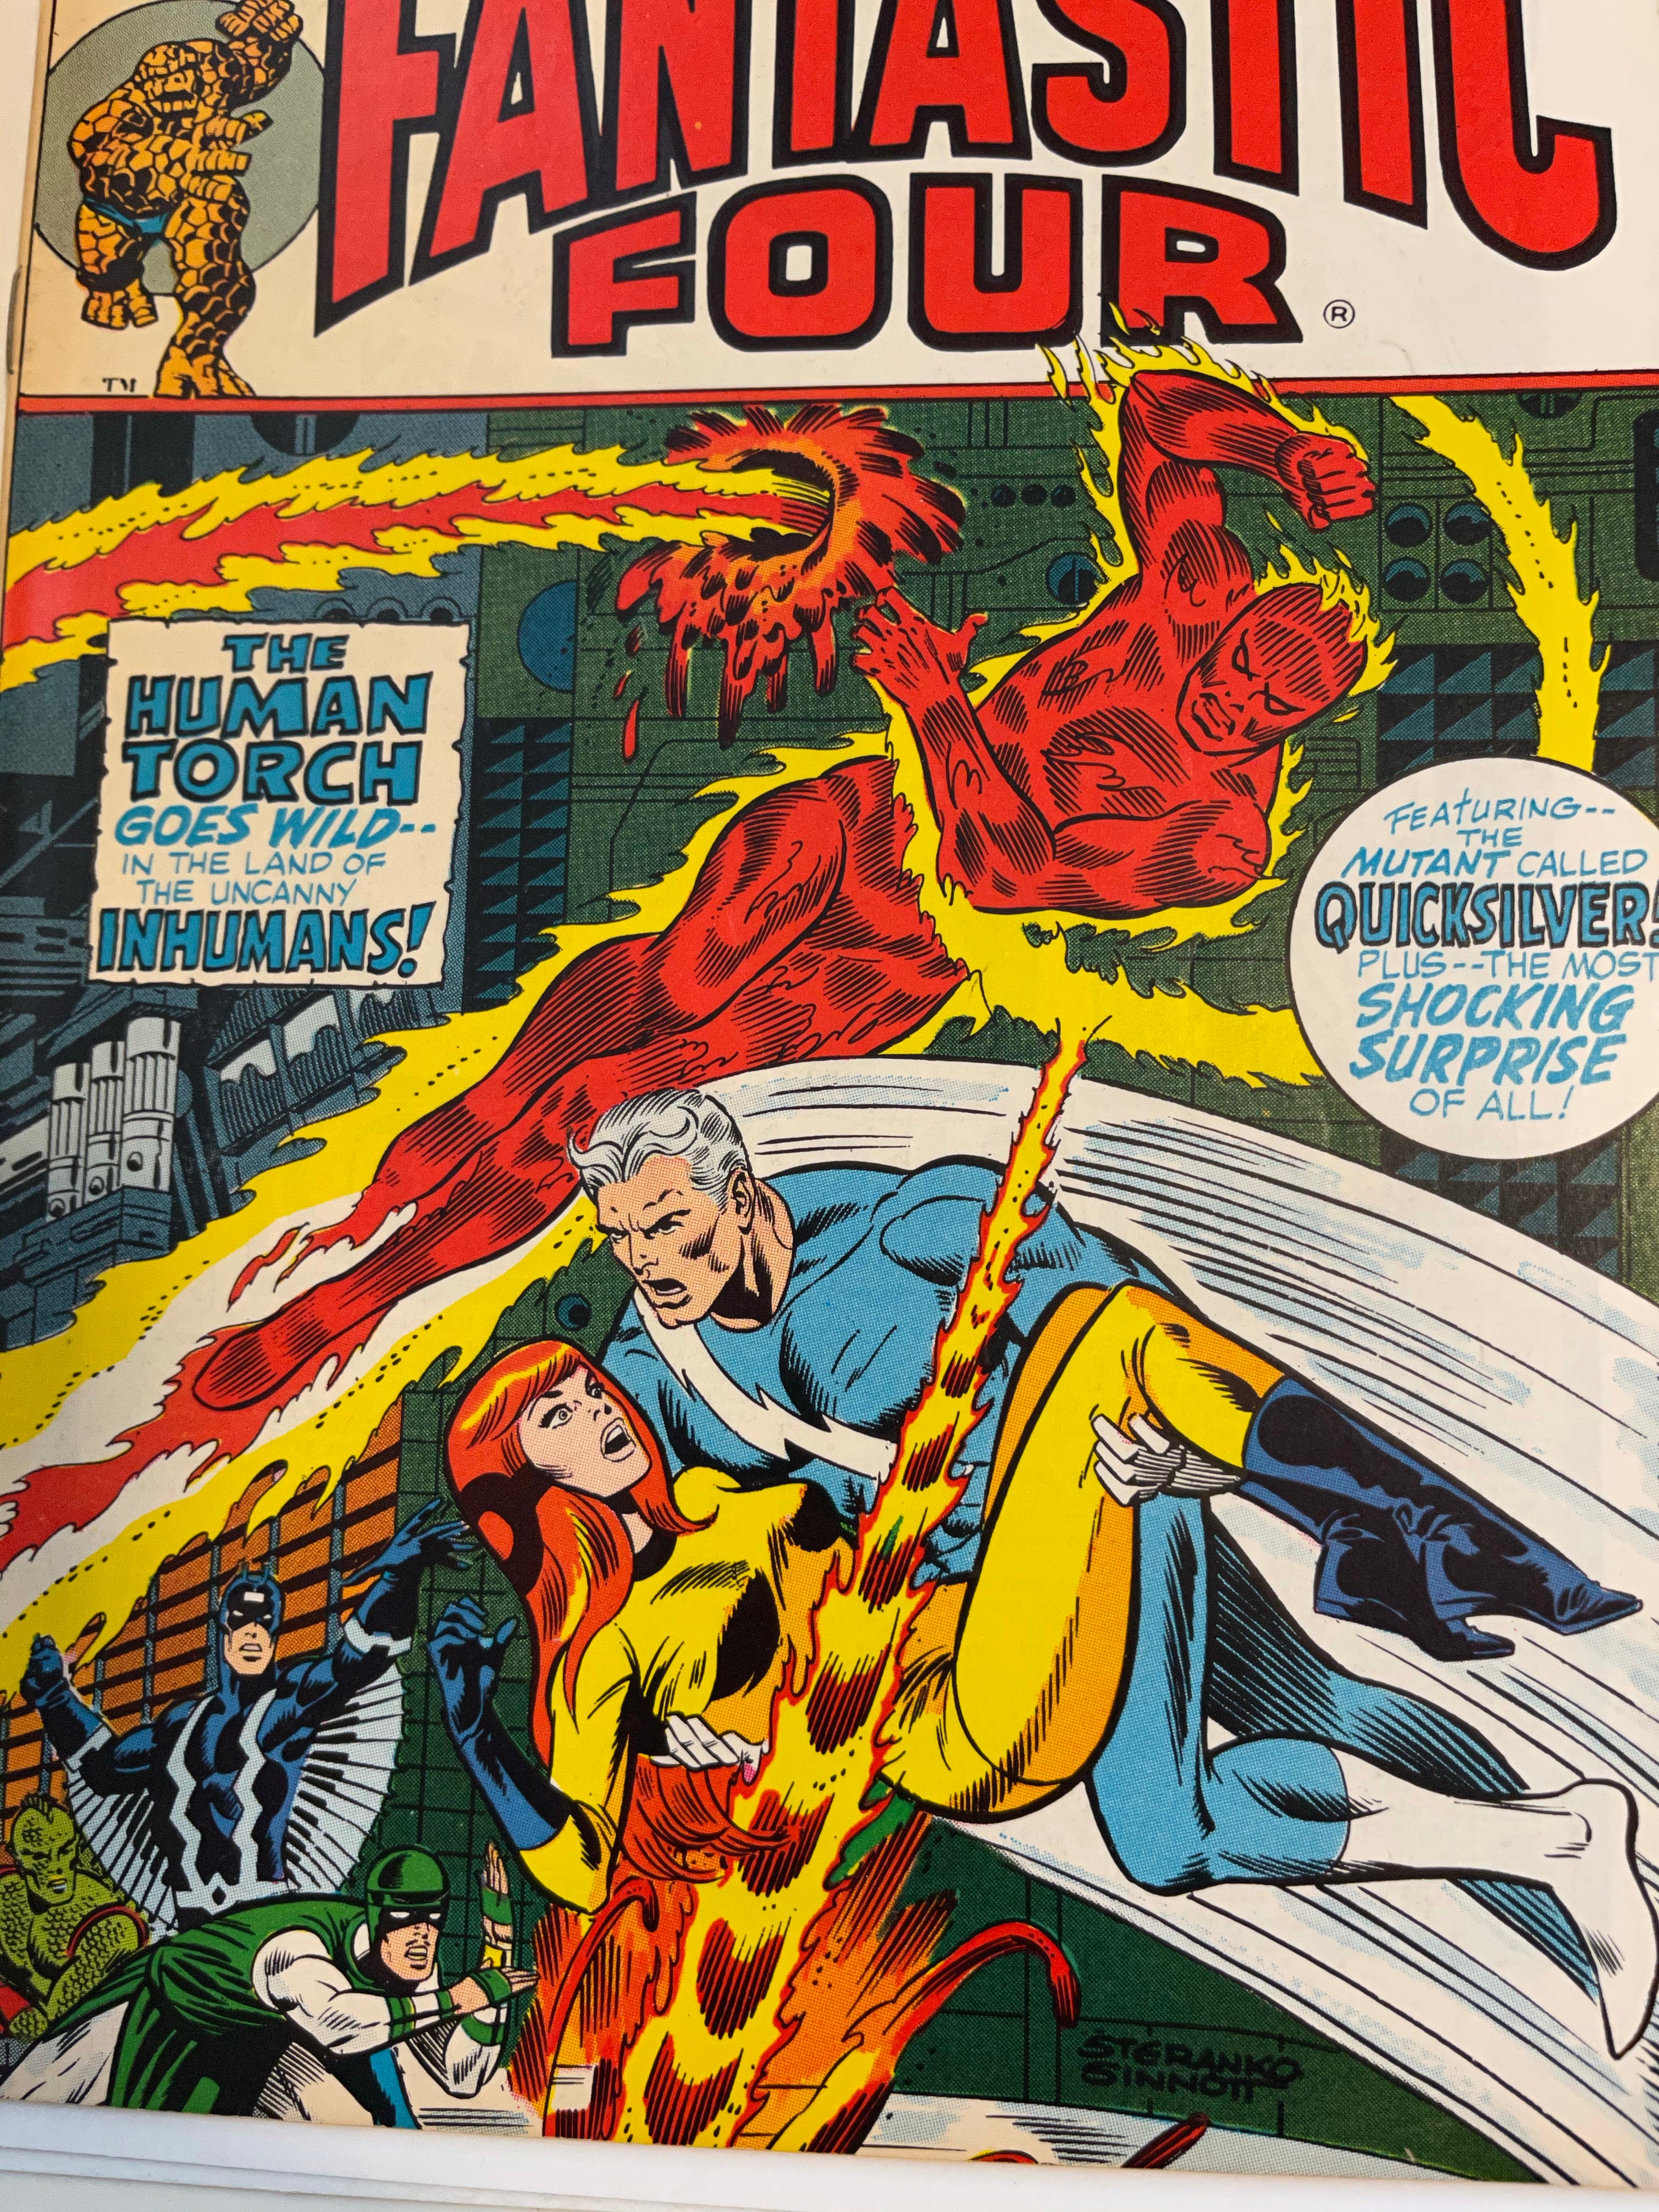 Fantastic Four #131 FN/VF comic book